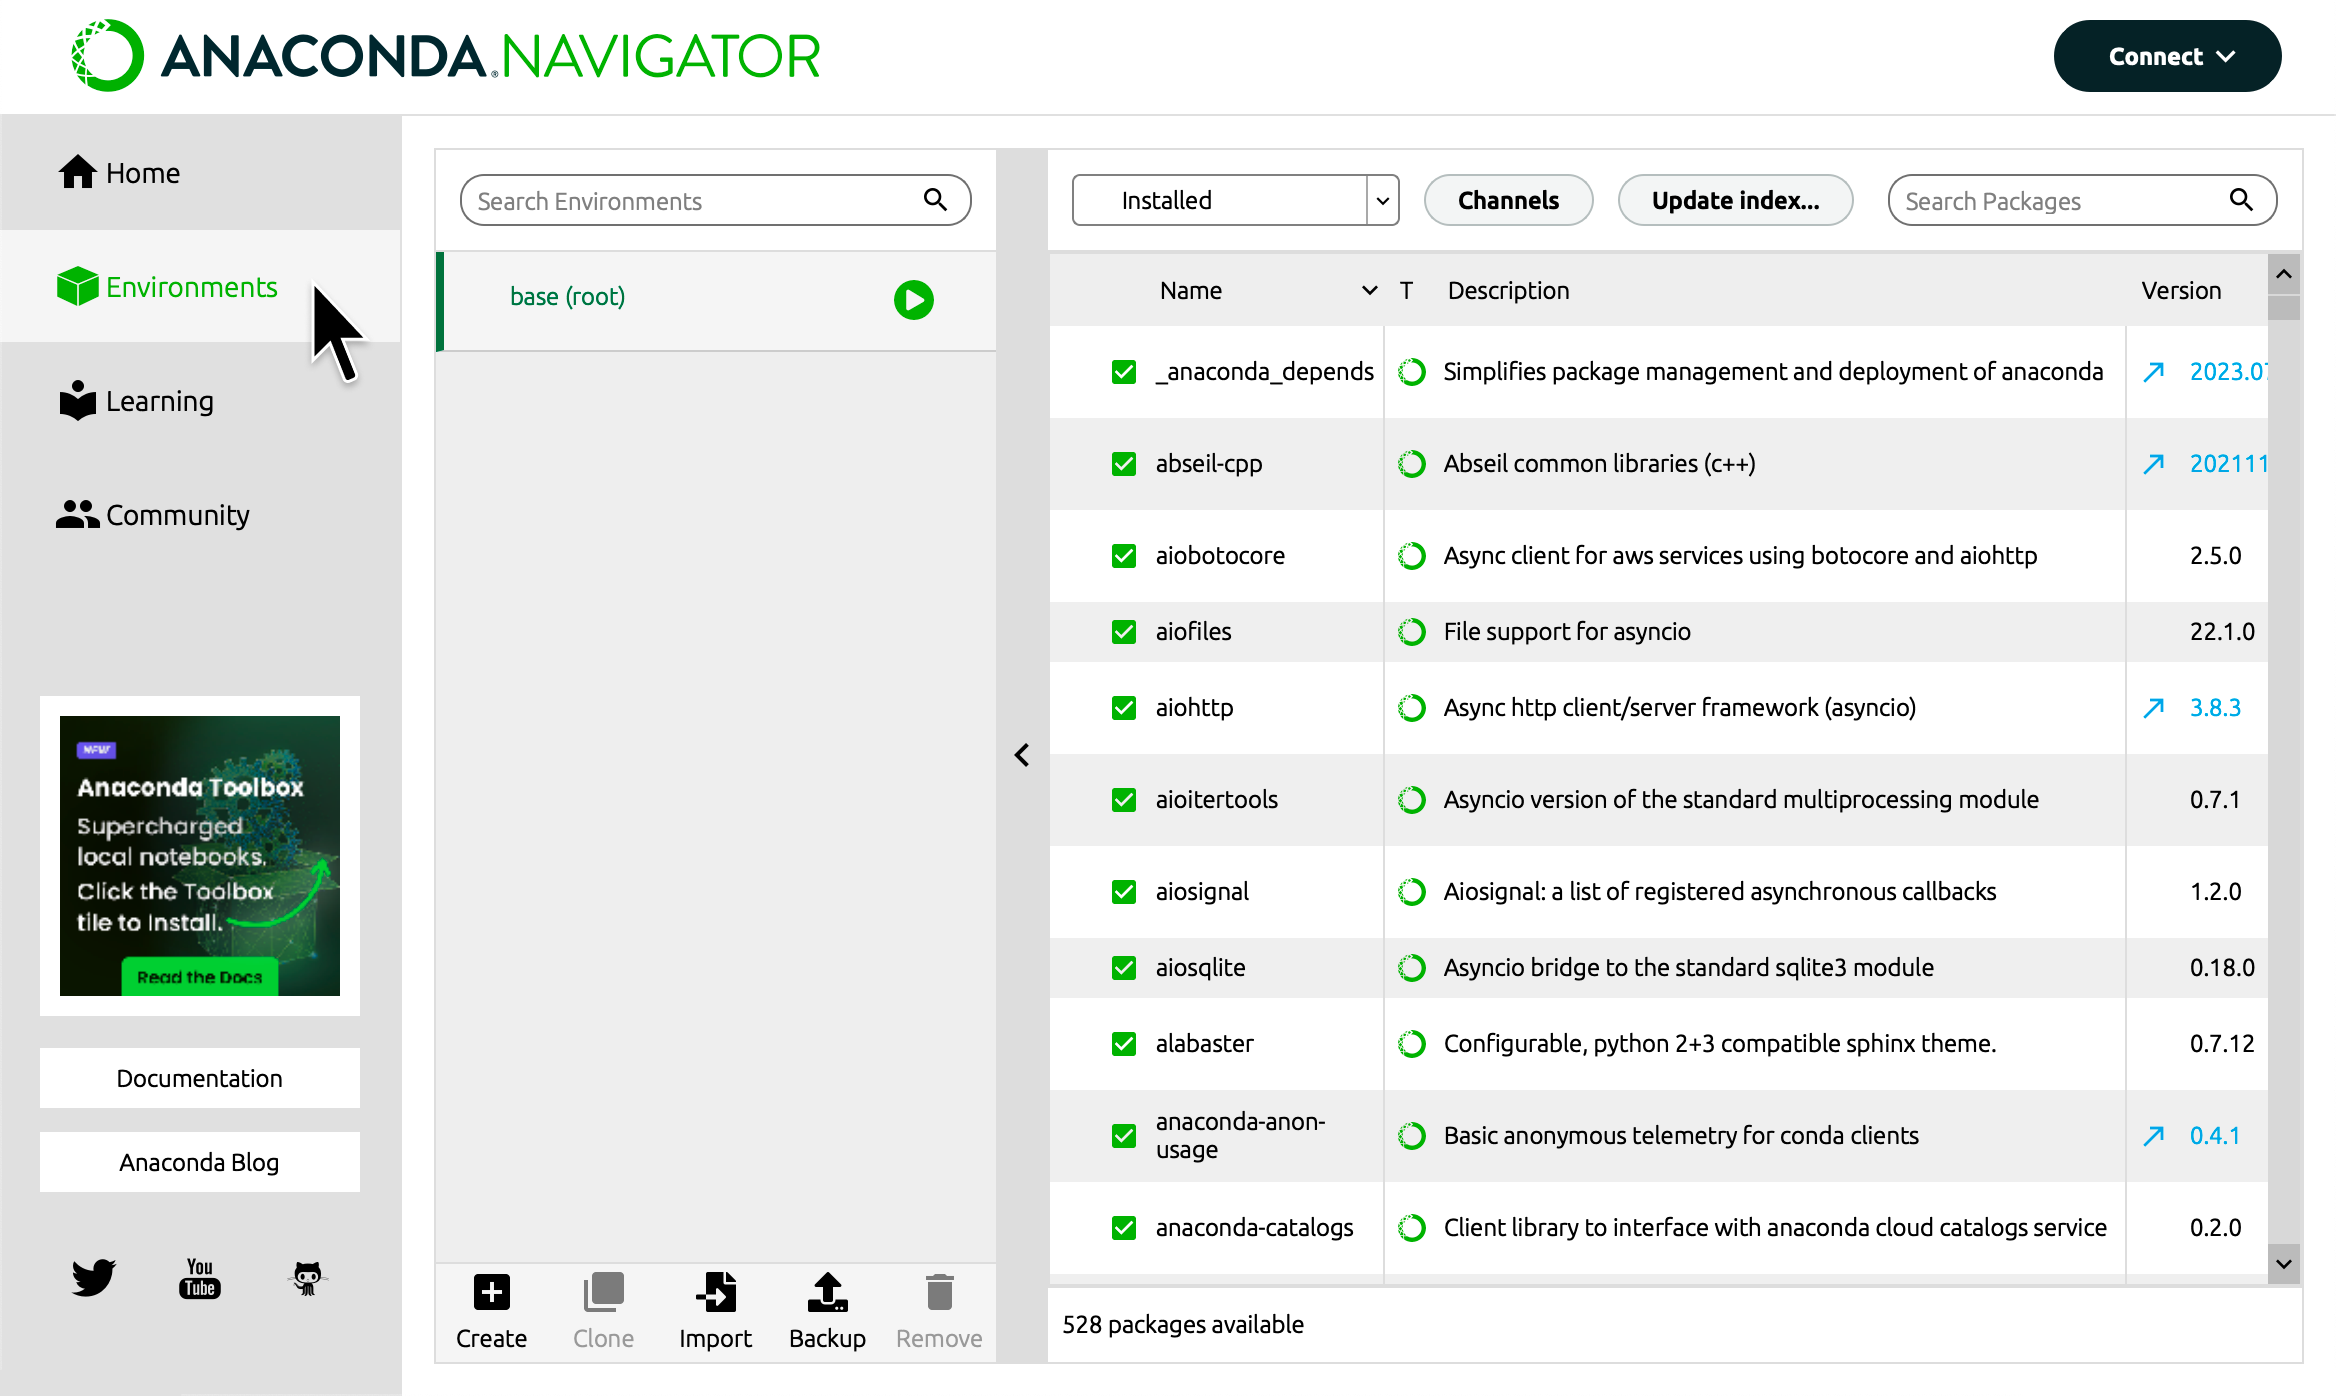 Open your environments list in Anaconda Navigator